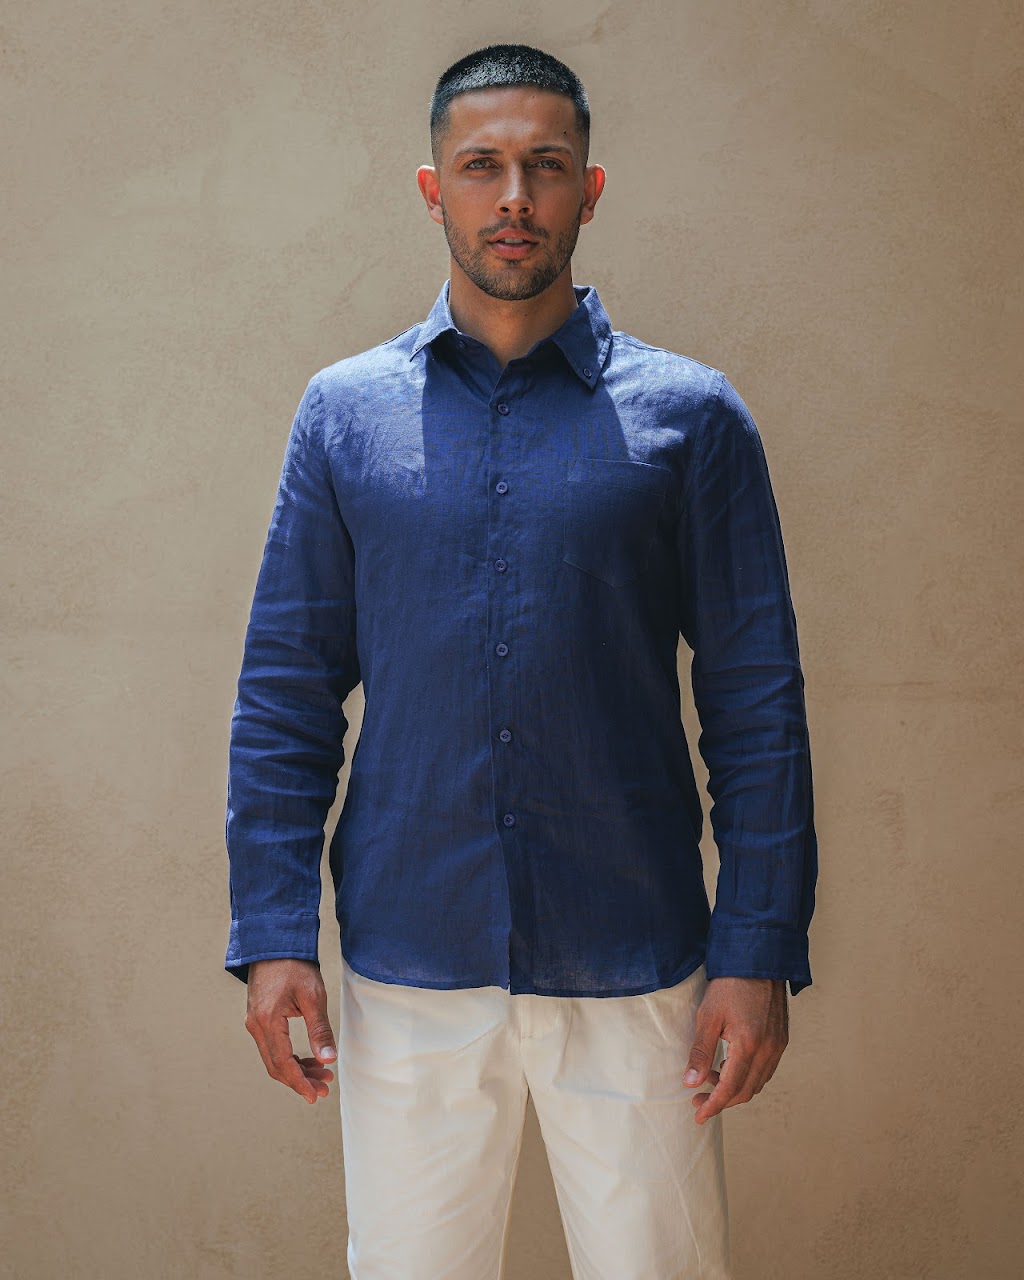 Azul Collective Designer Uniforms | clothing store | 2/44 Jamieson St, Bulimba QLD 4171, Australia | 0434011978 OR +61 434 011 978